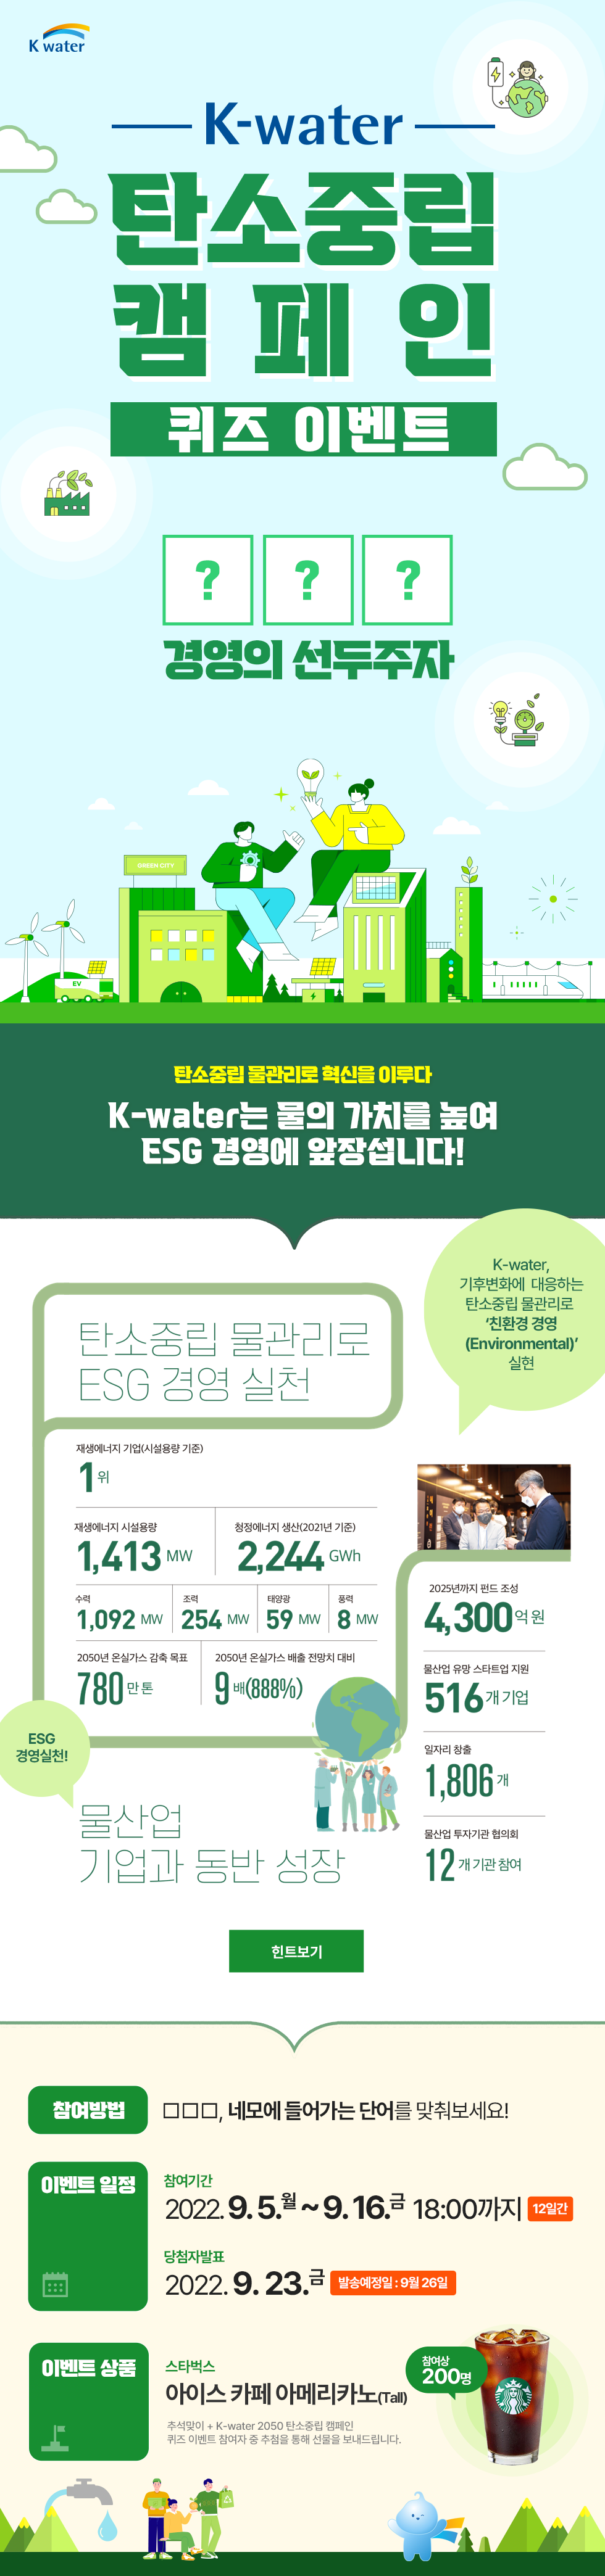 K-water 탄소중립 캠페인 퀴즈 이벤트